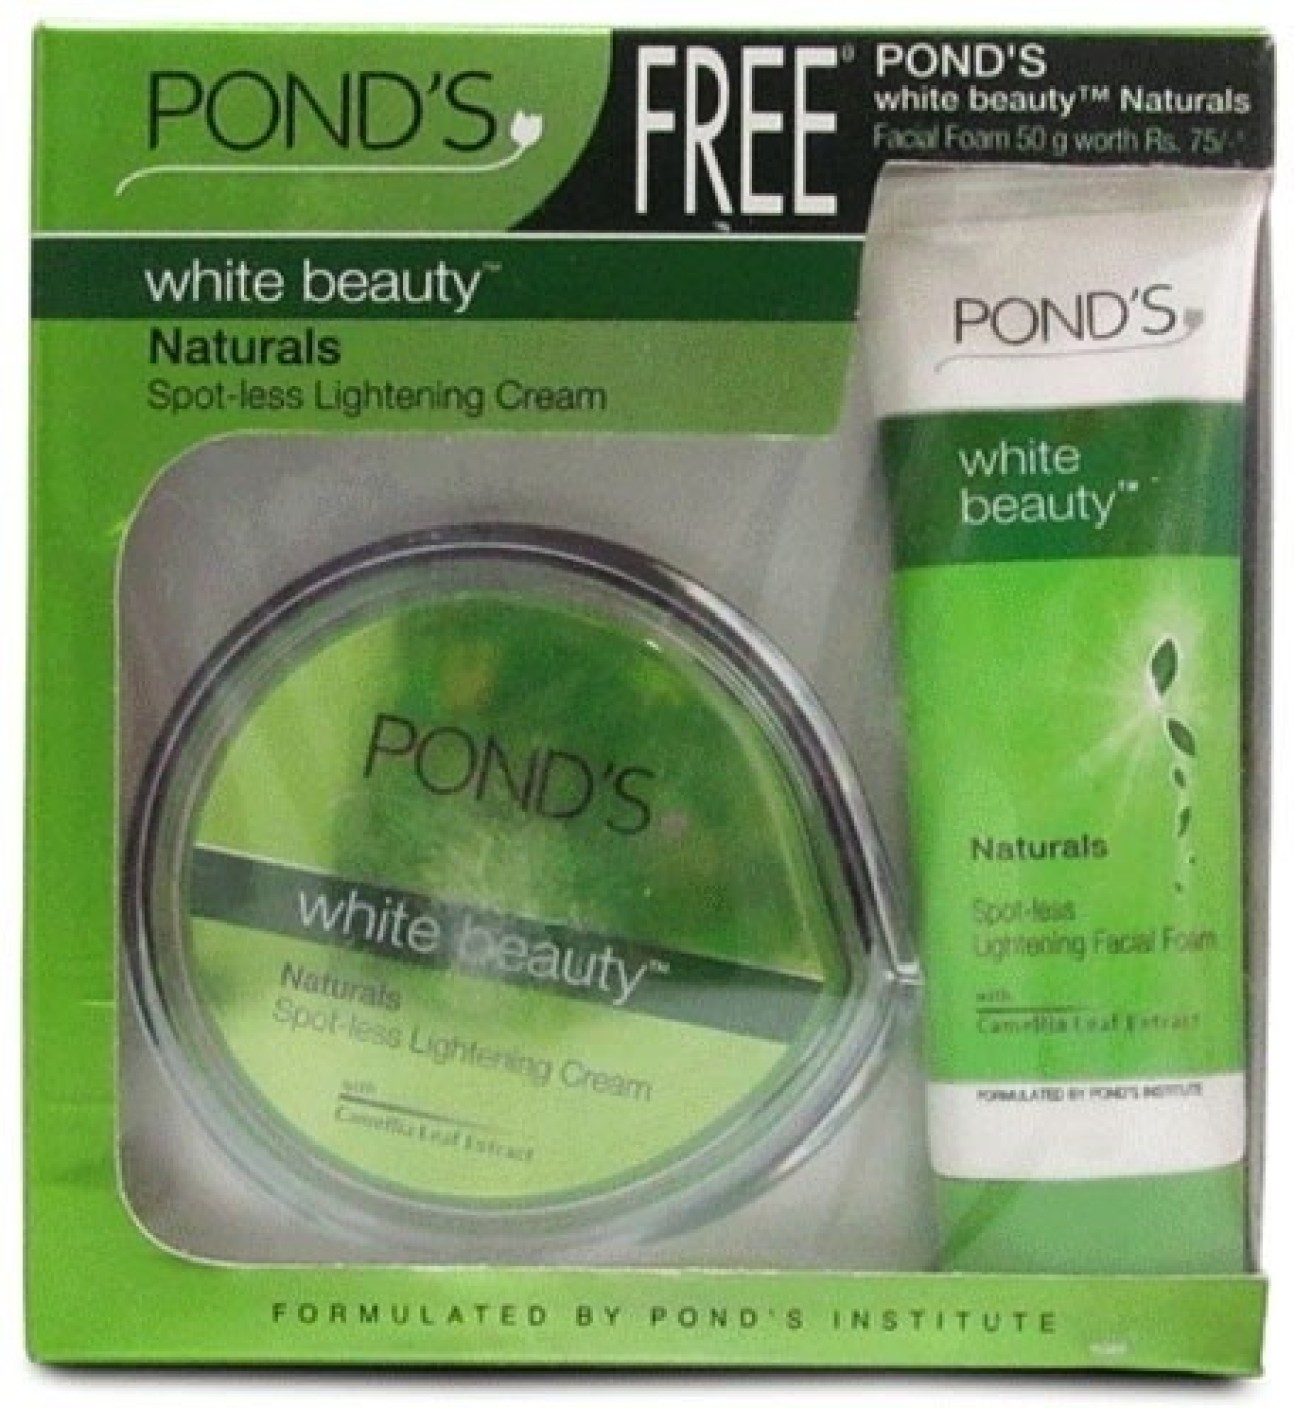 Ponds White Beauty Daily Spotless Lightening Cream - Price 